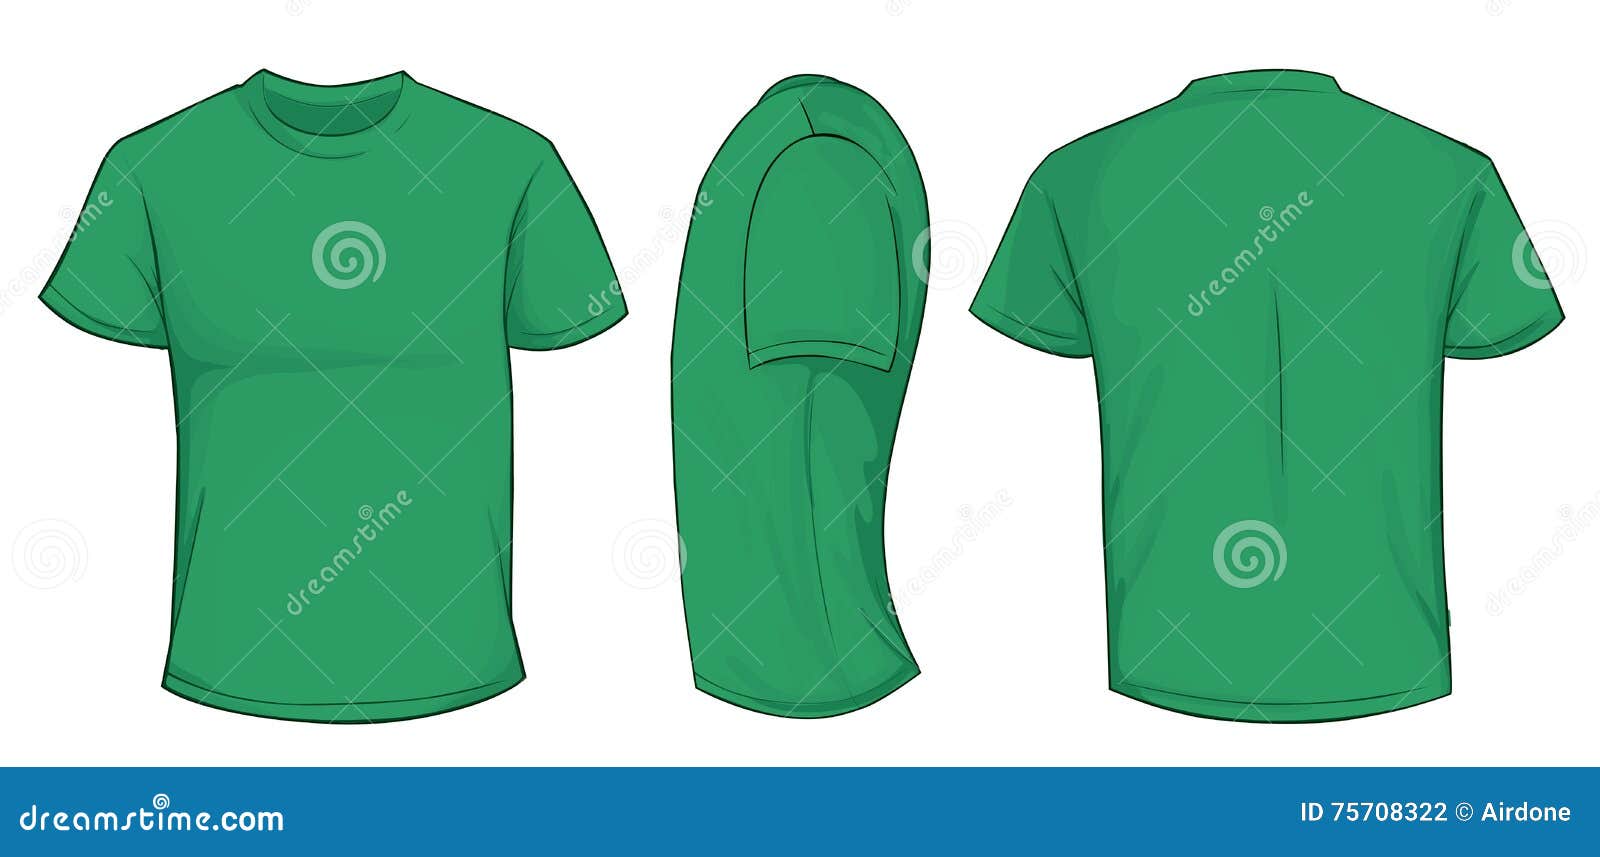 Download Green Shirt Template stock illustration. Illustration of ...